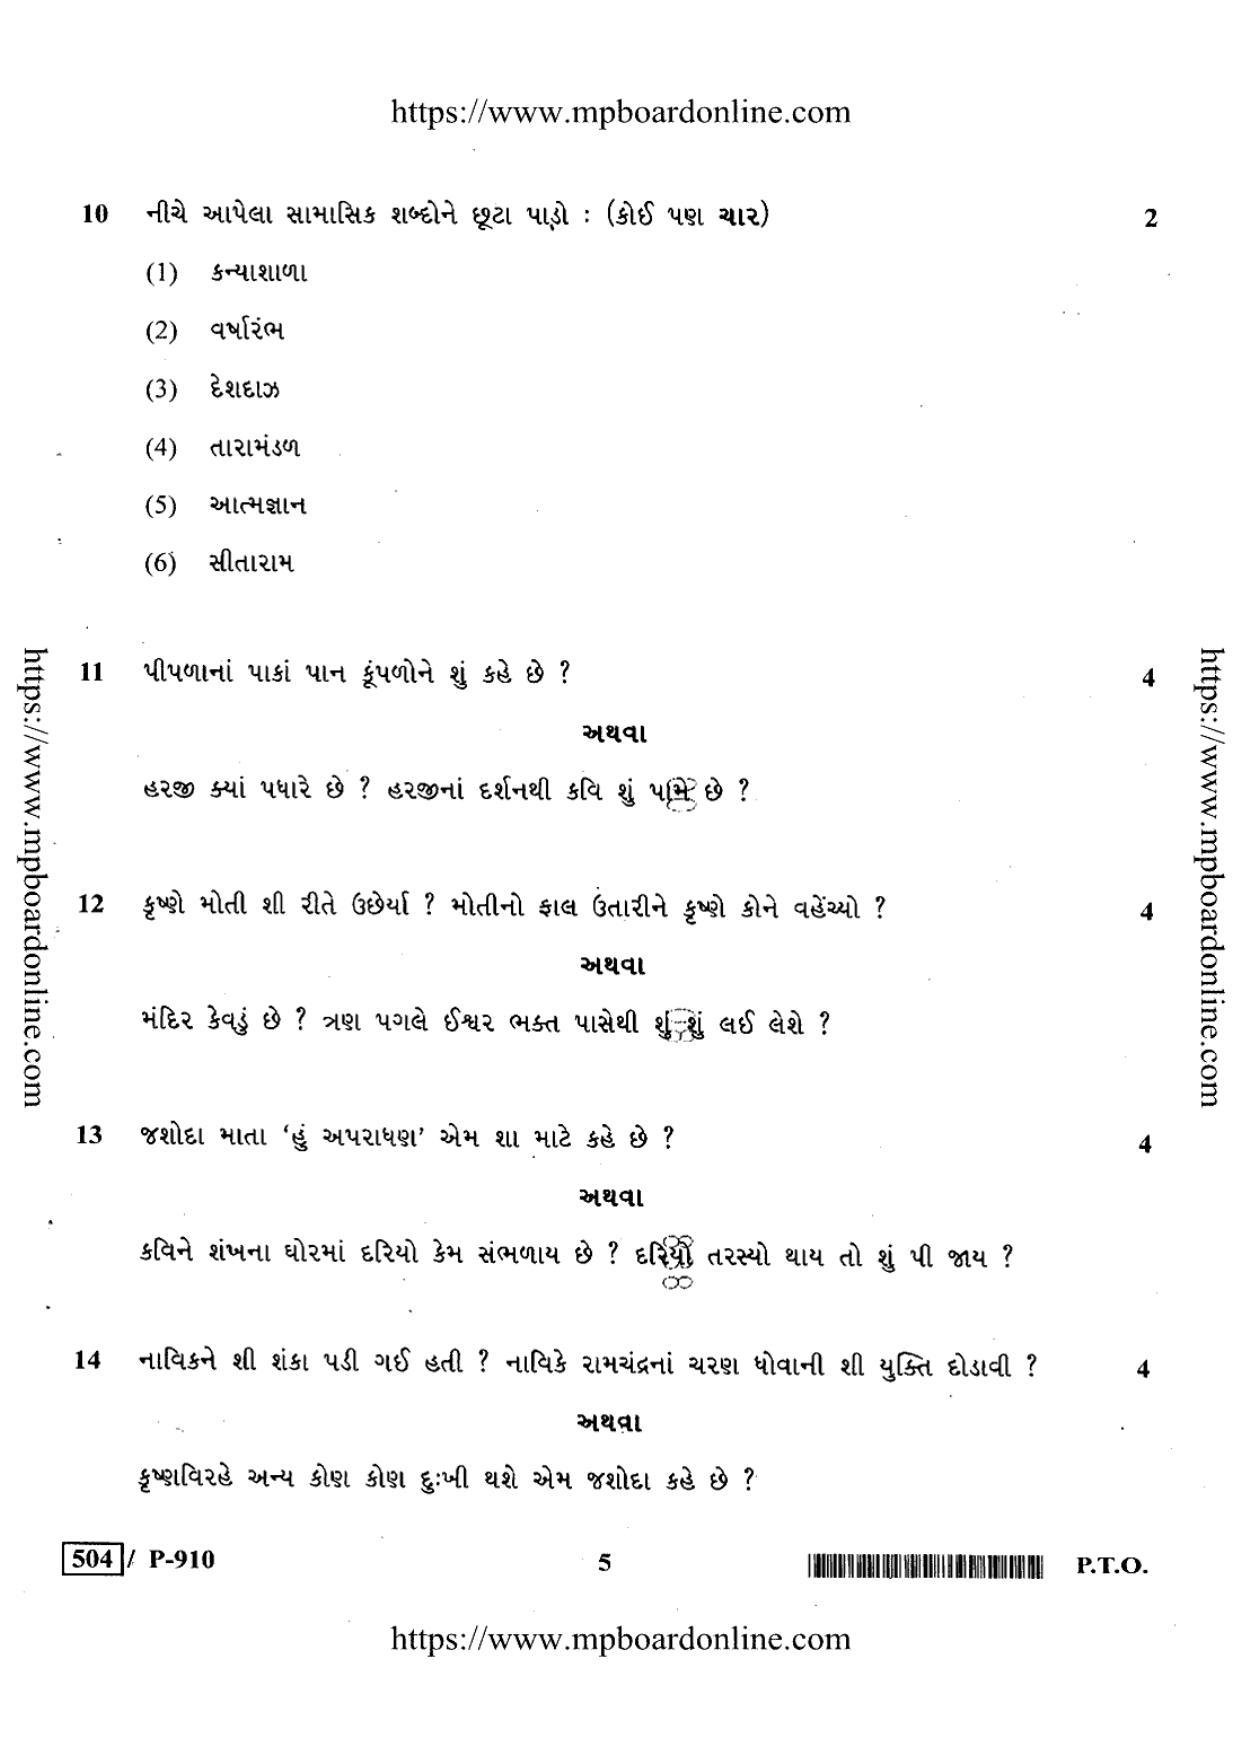 MP Board Class 10 Gujrat General 2020 Question Paper - Page 5